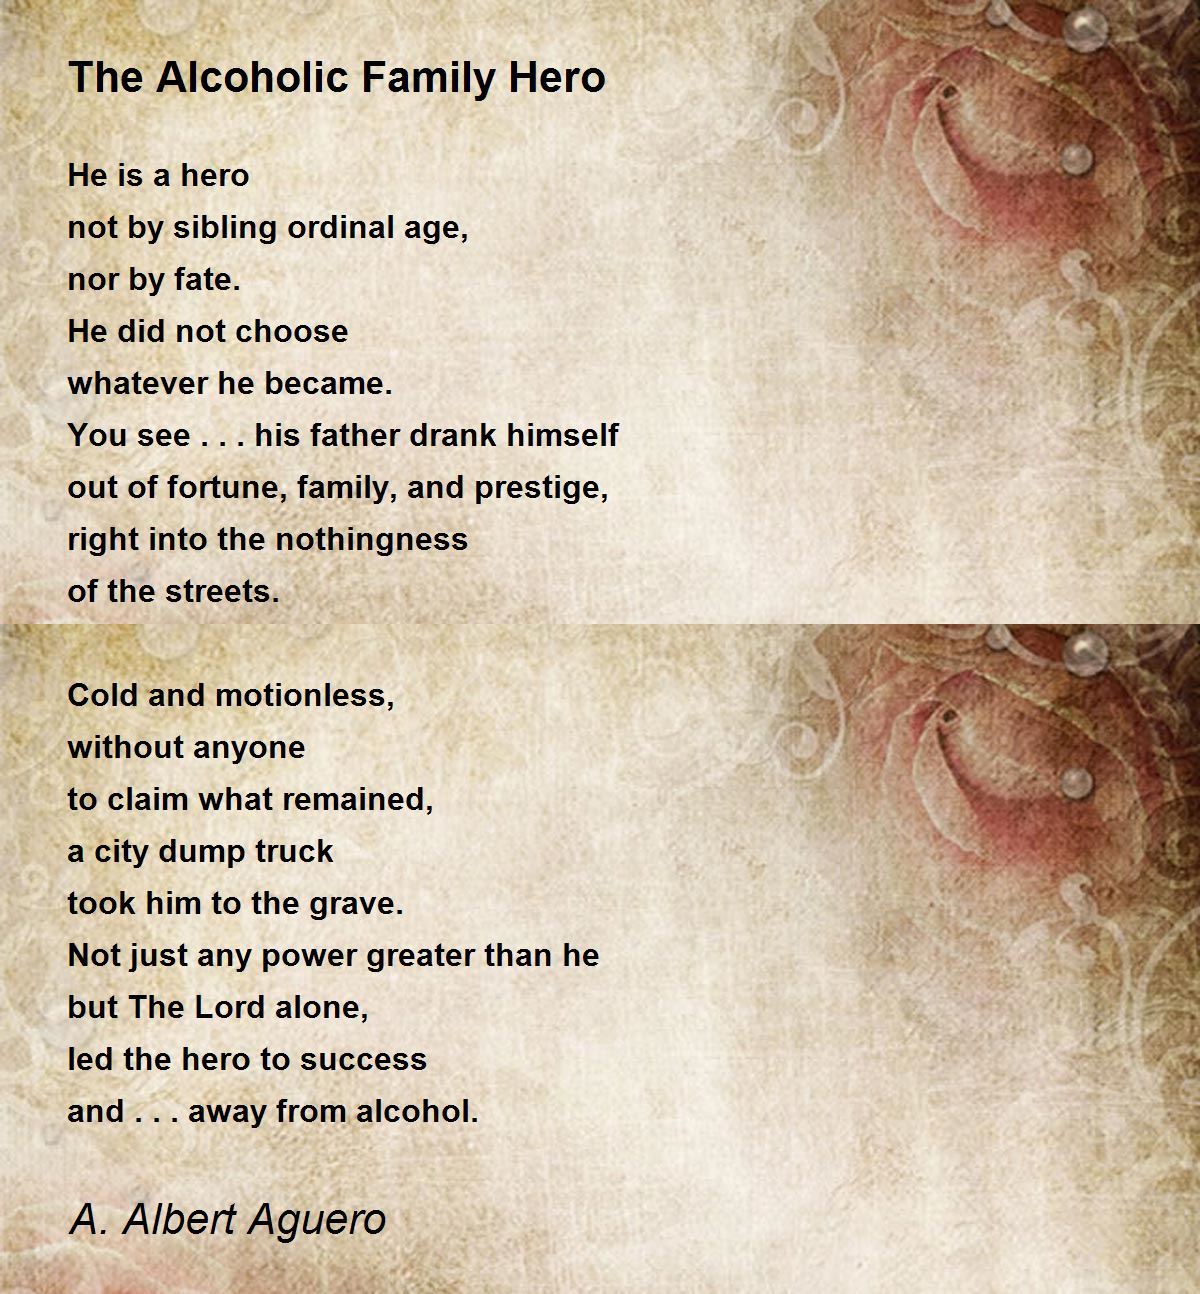 The Alcoholic Family Hero Poem by A. Albert Aguero - Poem 